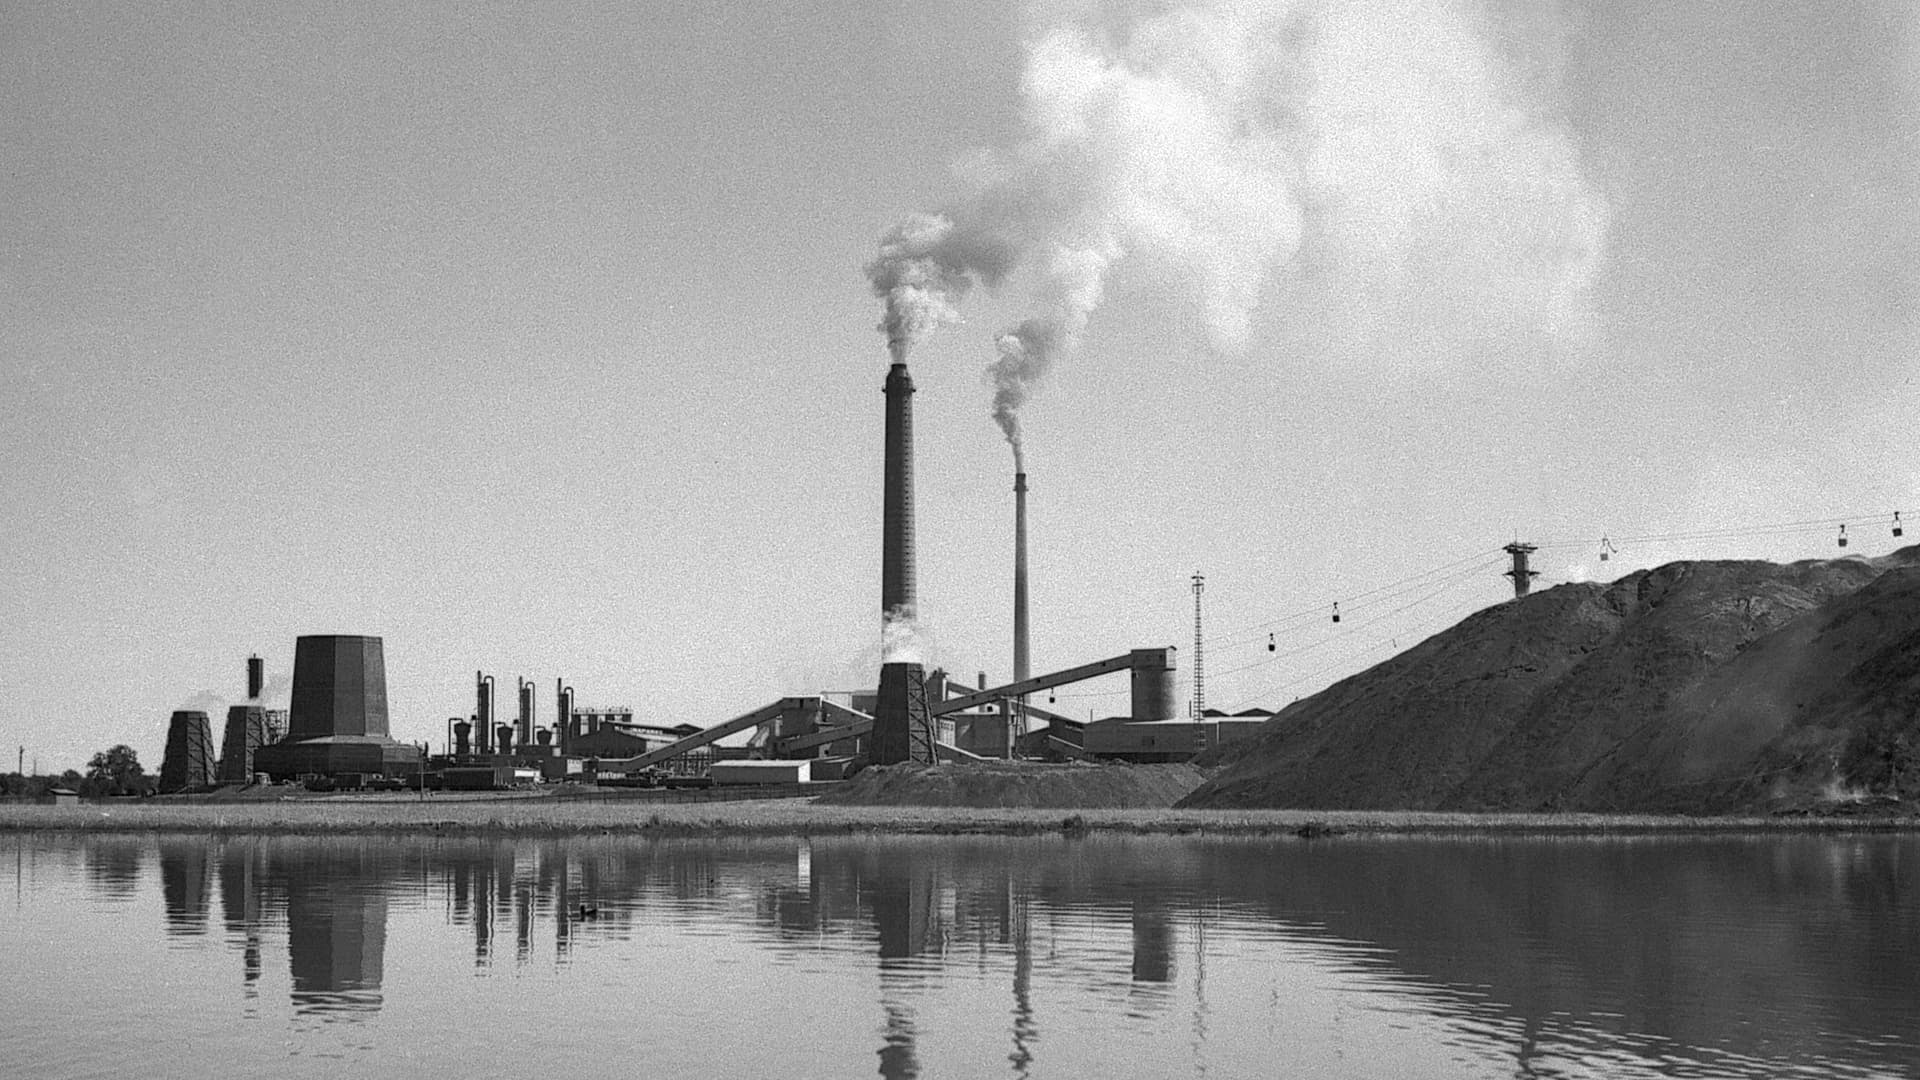 Vy över oljeproduktionen i Kvarntorp på 1940-talet